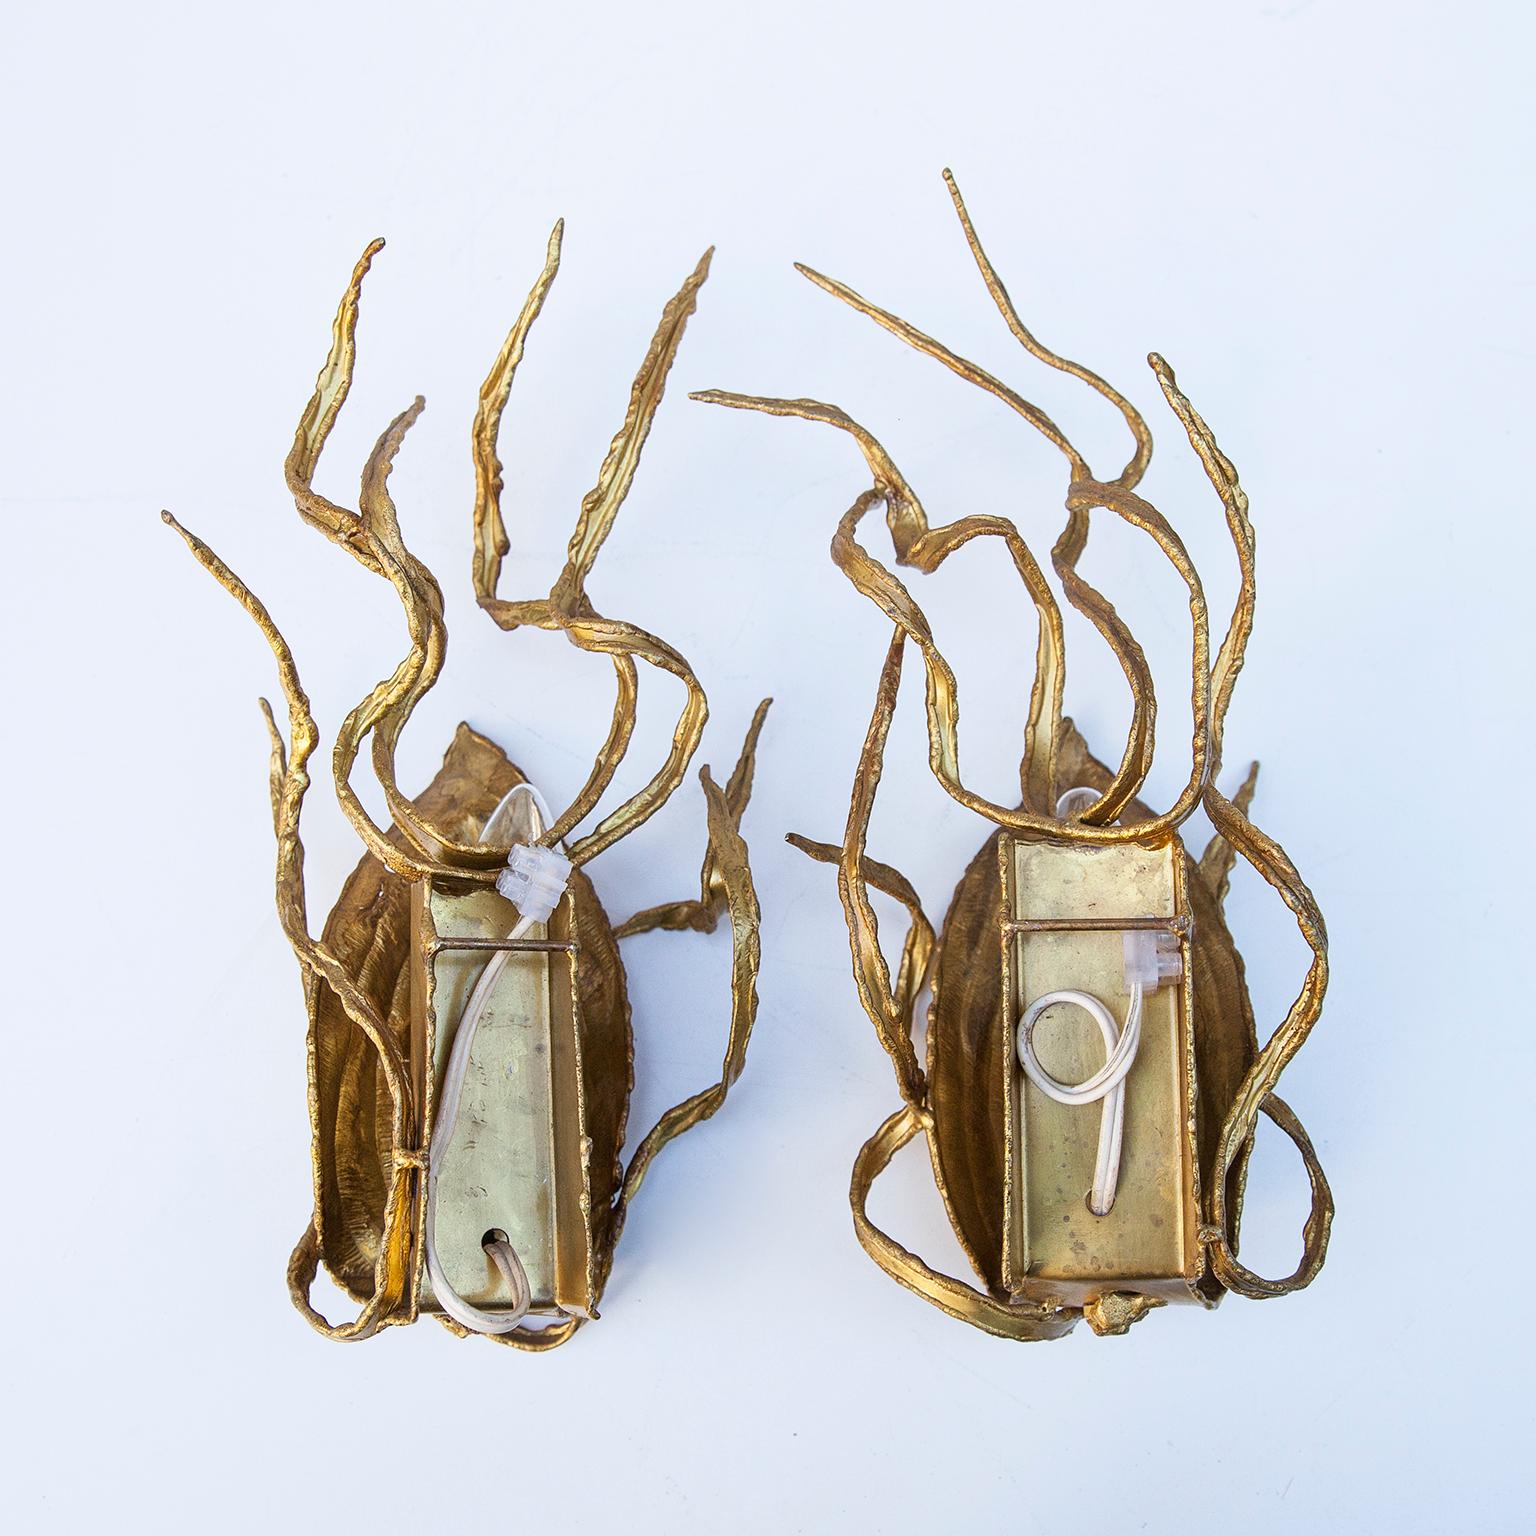 Hollywood Regency Sculptural Gilded Brass Sconces by Paul Moerenhout, Belgium, 1970s